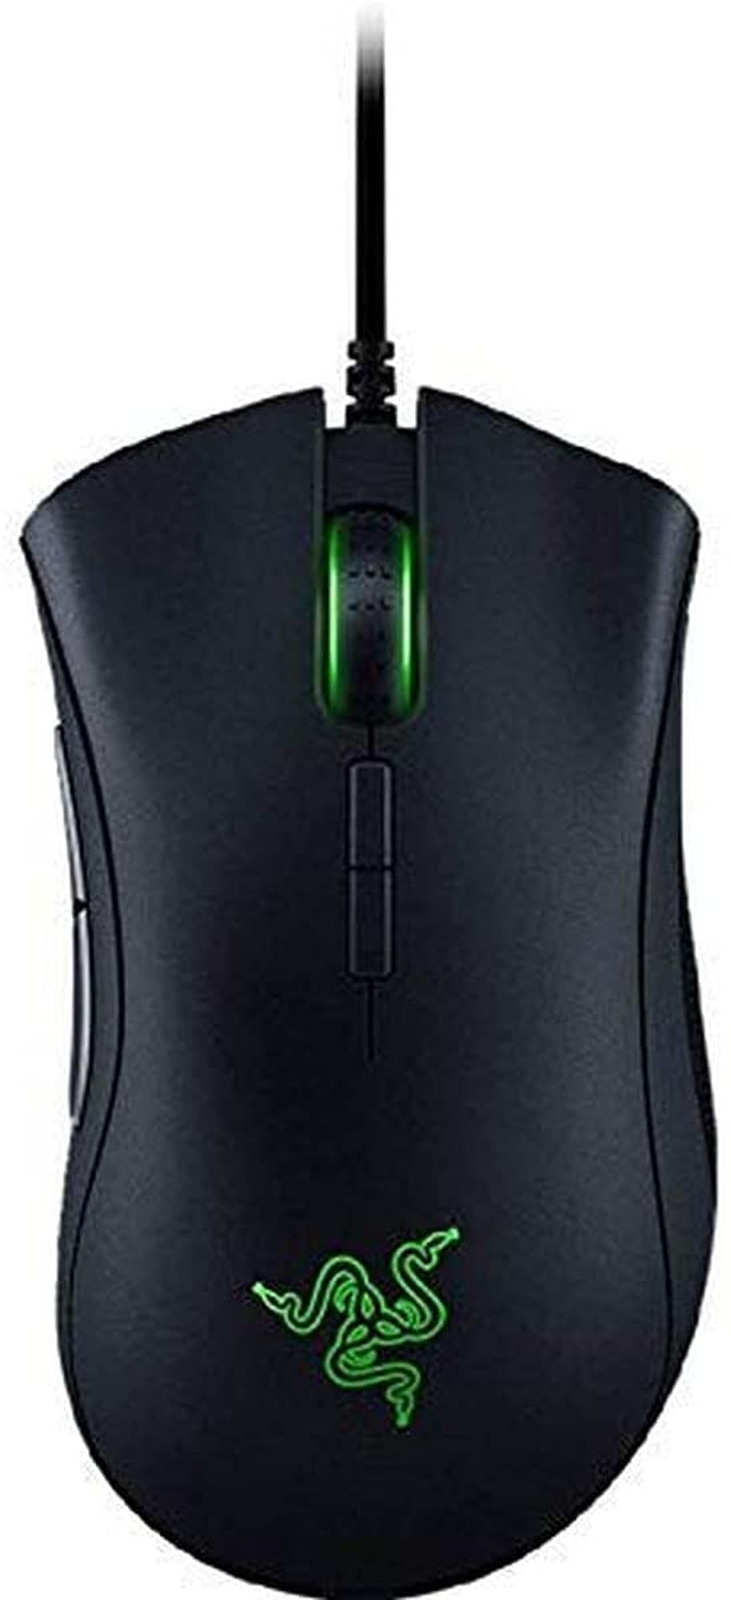 Razer Deathadder Elite Gaming Mouse: 16,000 DPI Optical Sensor - Chroma RGB Ligh